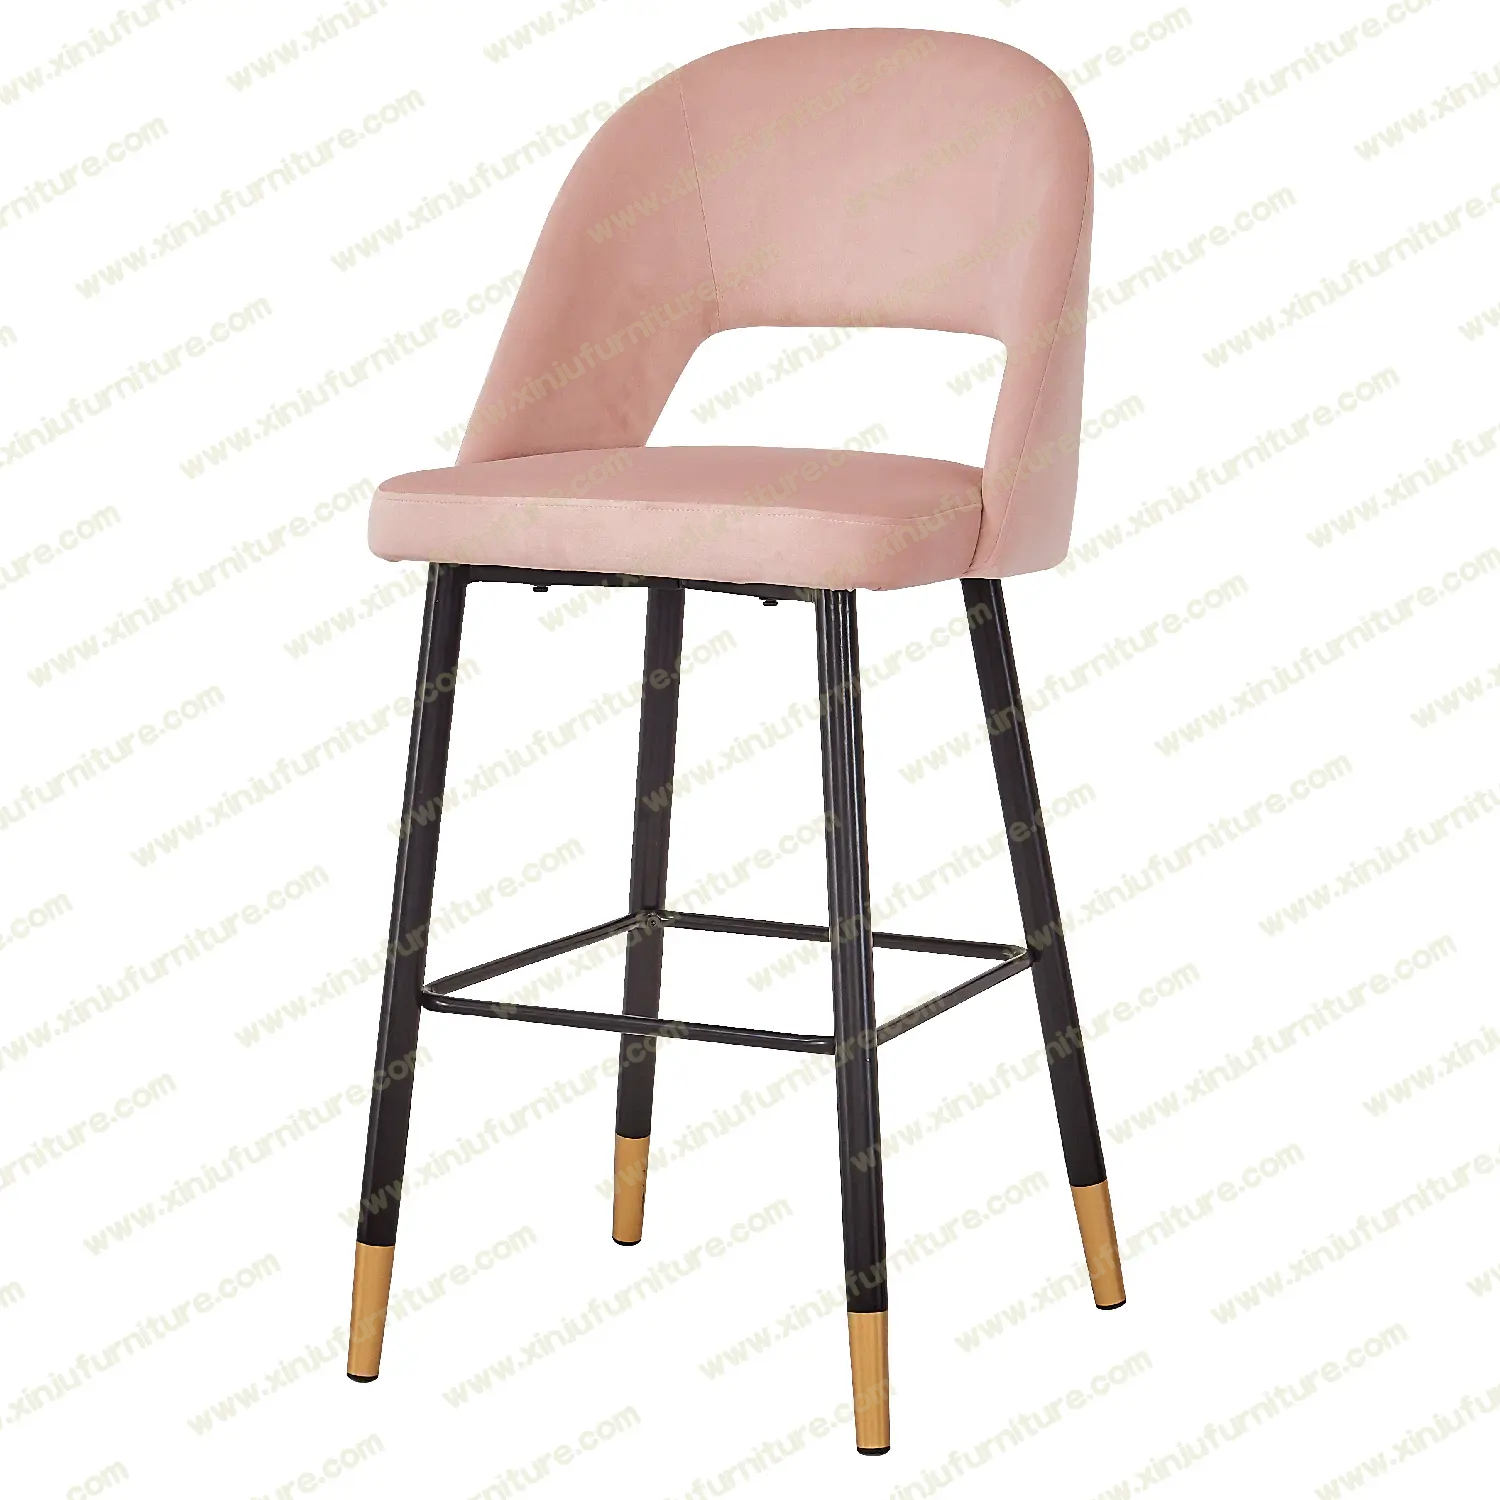 Pink hollow high back comfortable bar chair